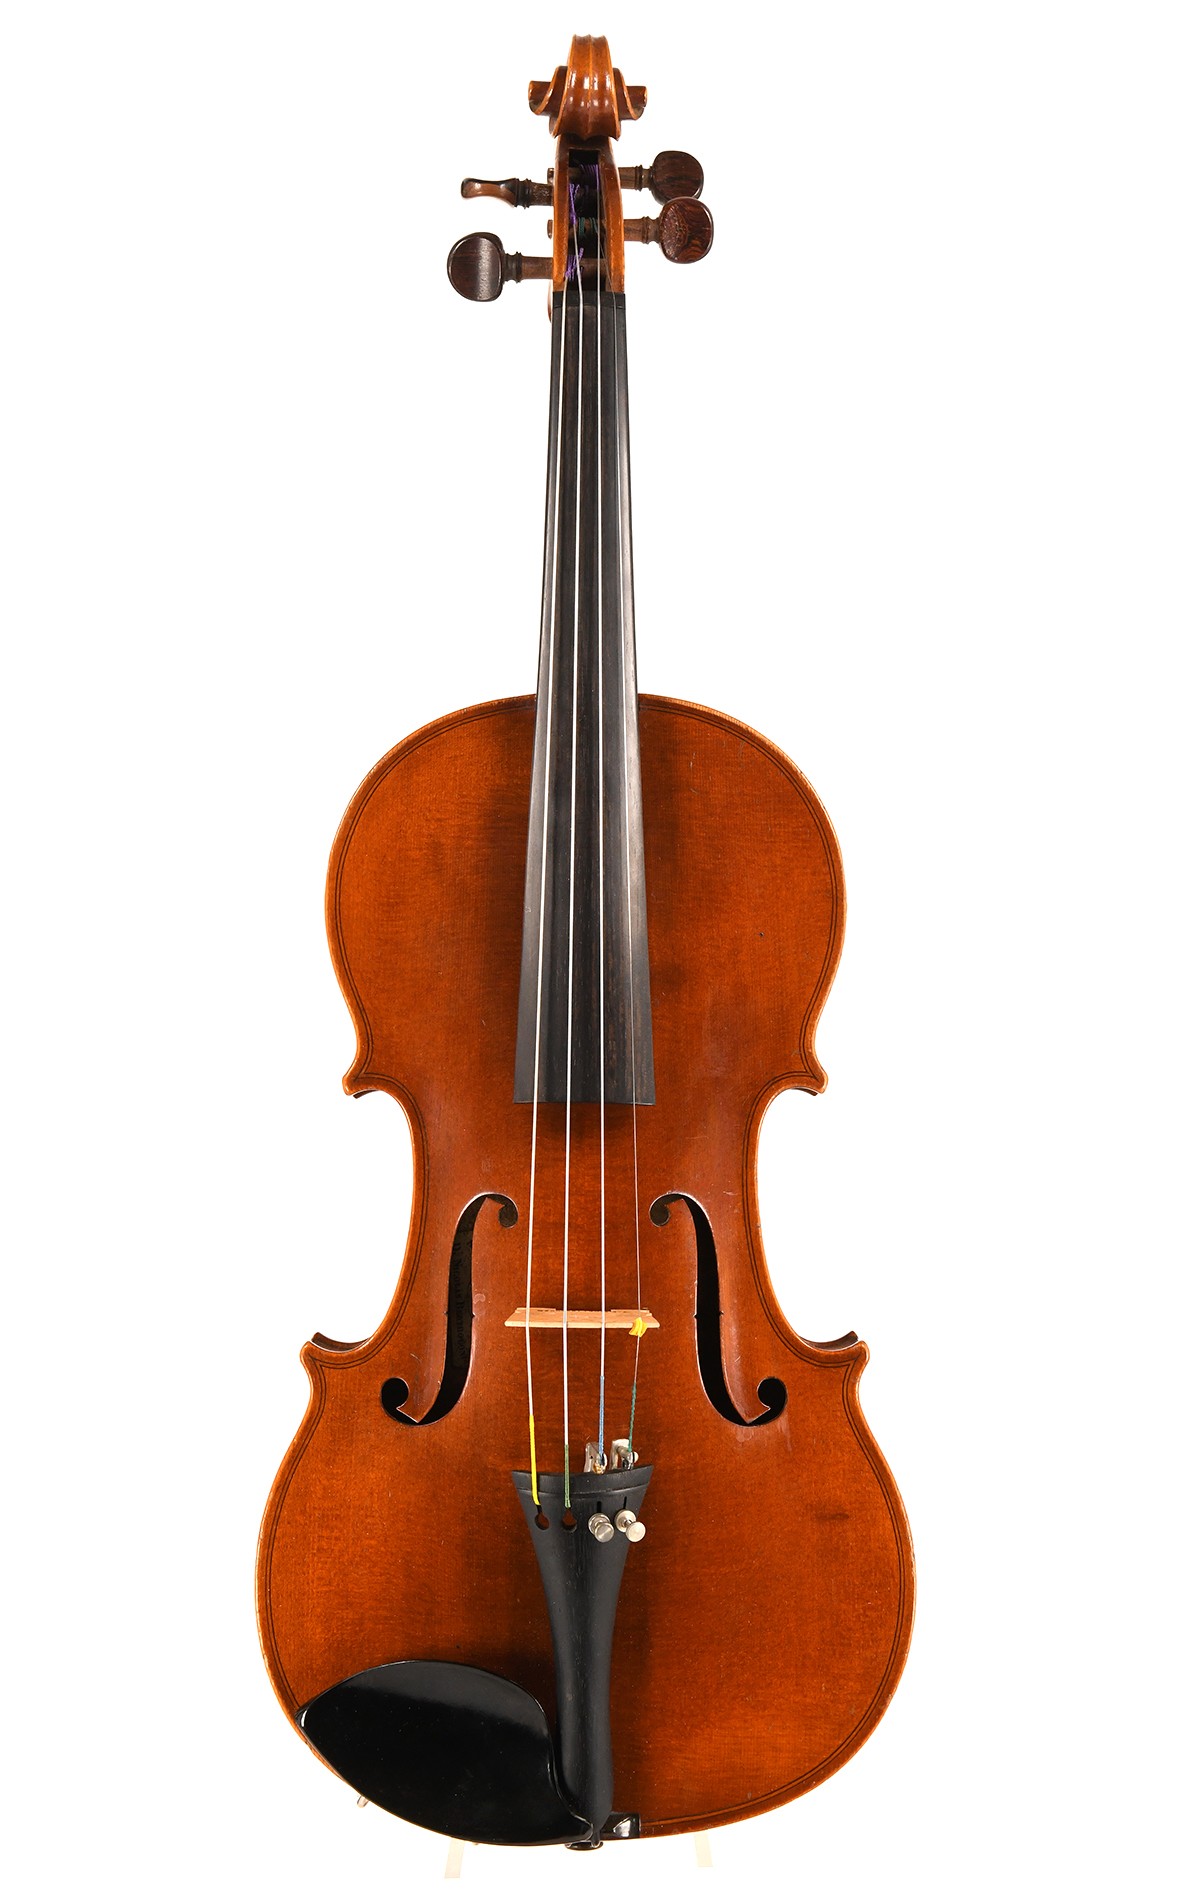 "Nicolas Bertholini" by Laberte, Mirecourt: Antique French violin